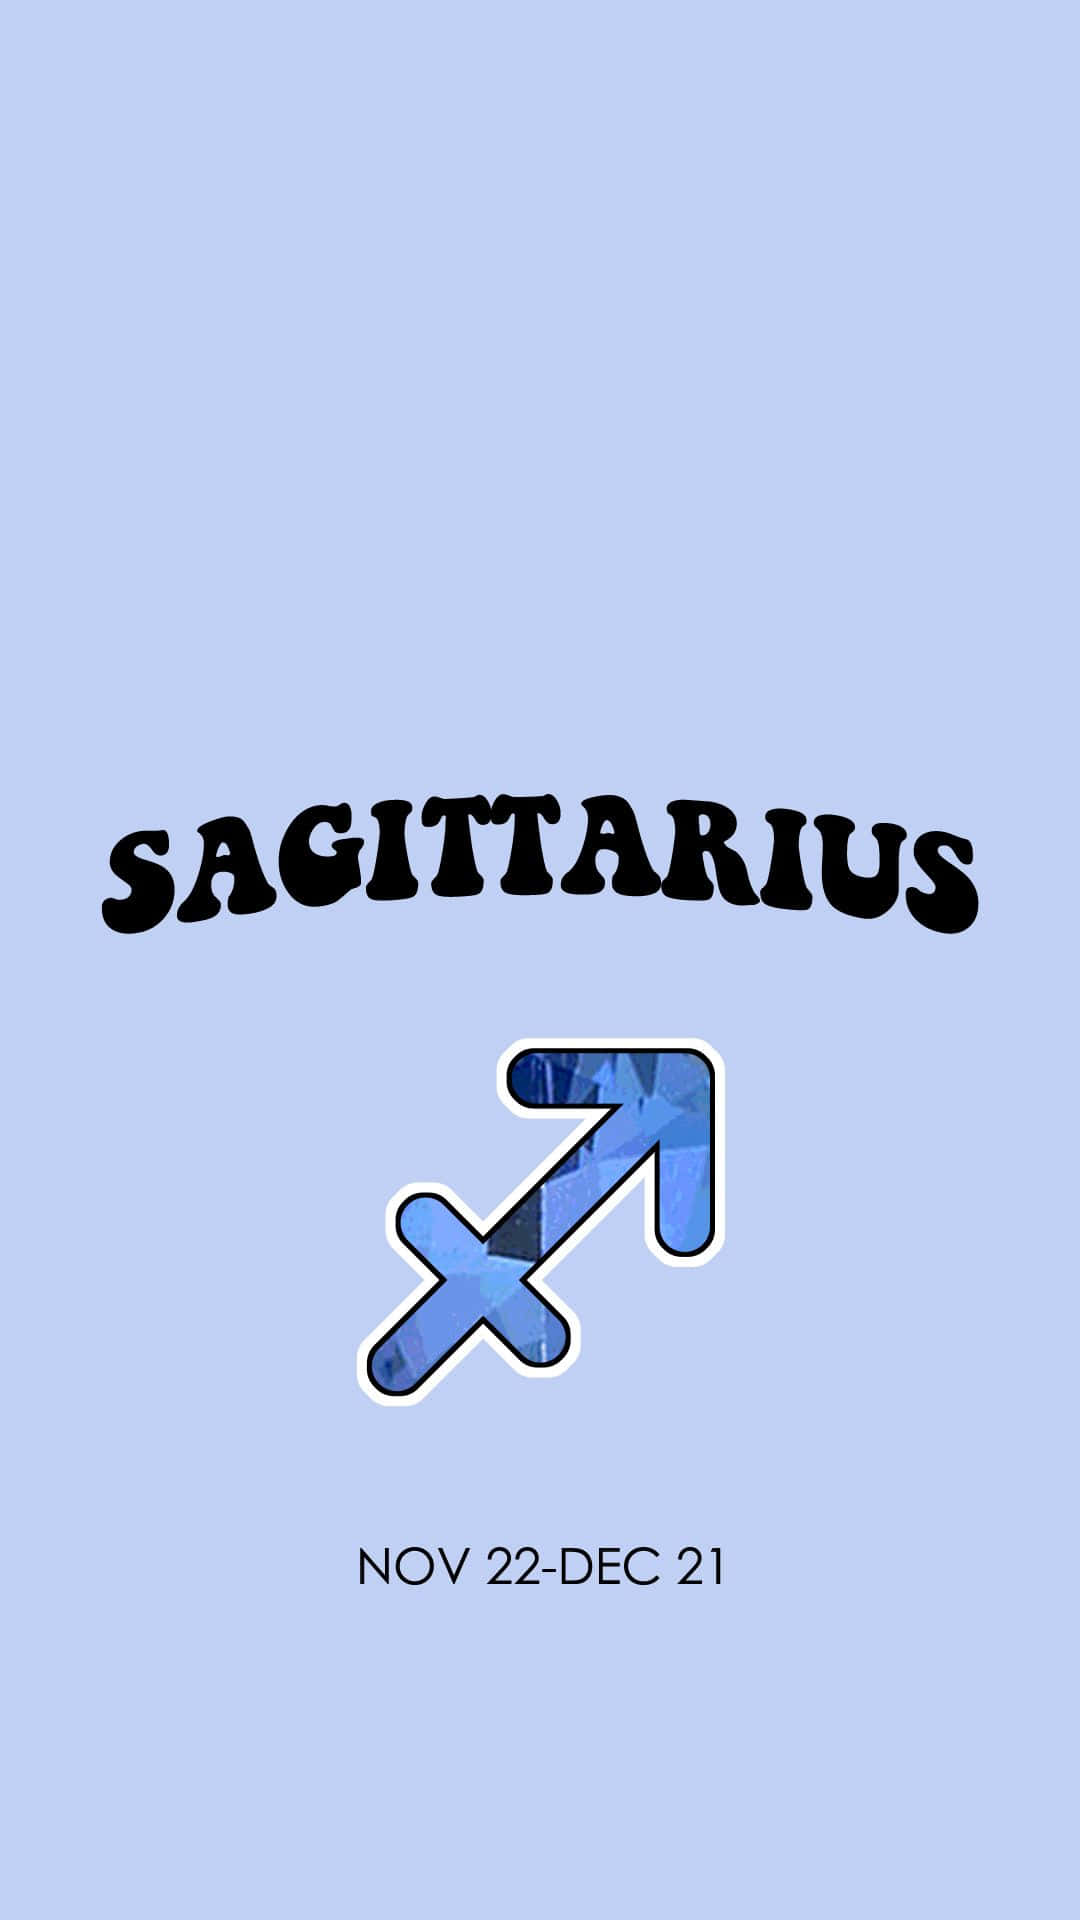 Captivating Image of the Sagittarius Zodiac Sign